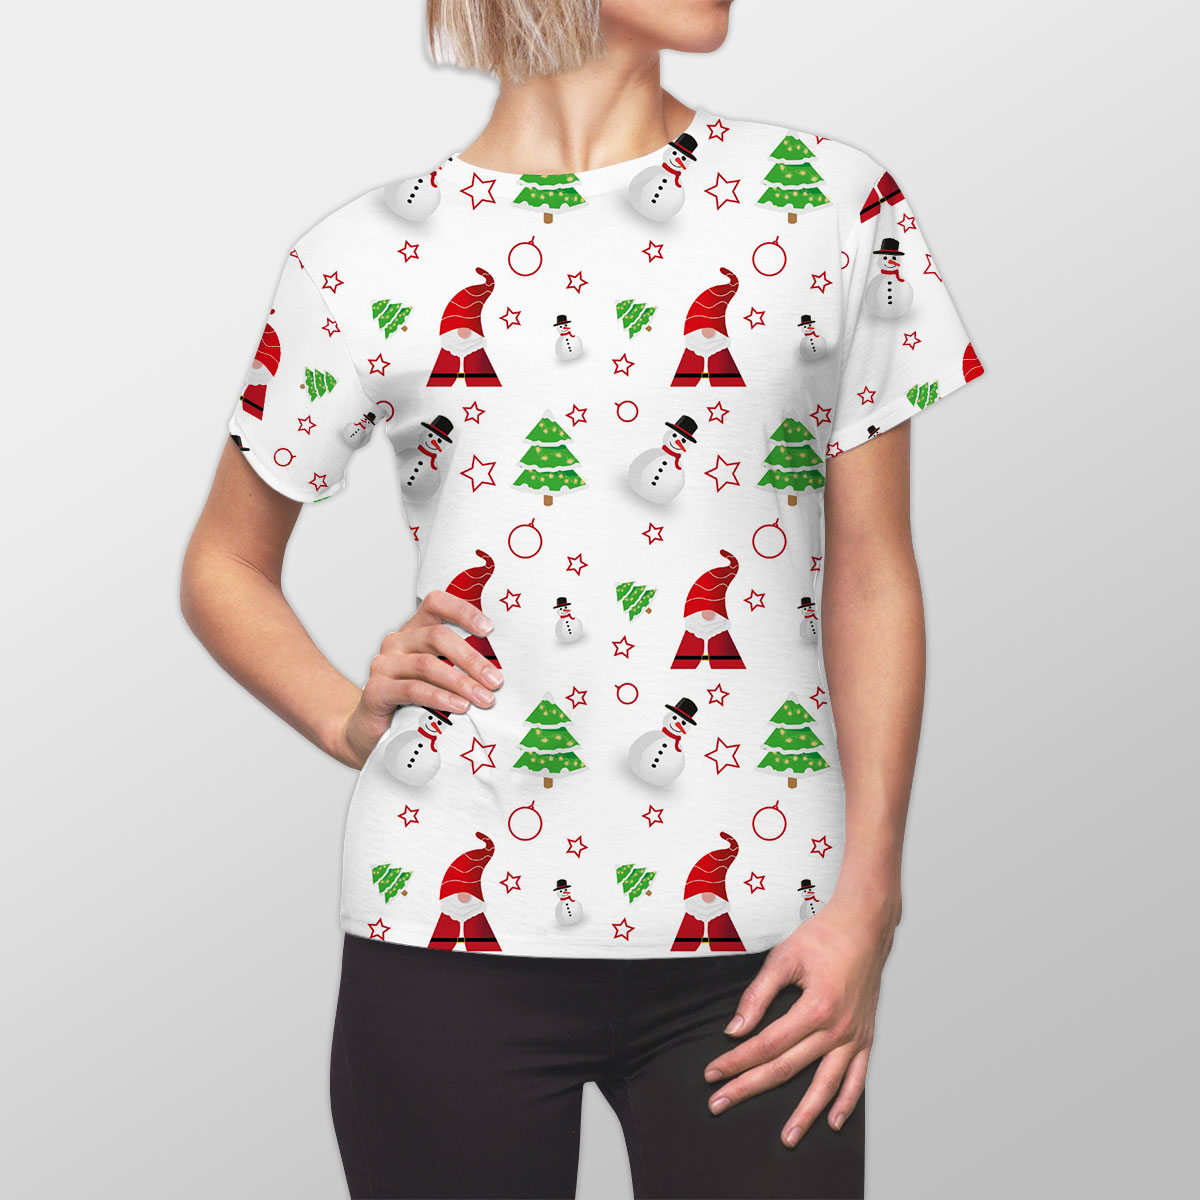 Santa Claus, Snowman Clipart And Pine Tree Silhouette Seamless Pattern Women Cut Sew Tee